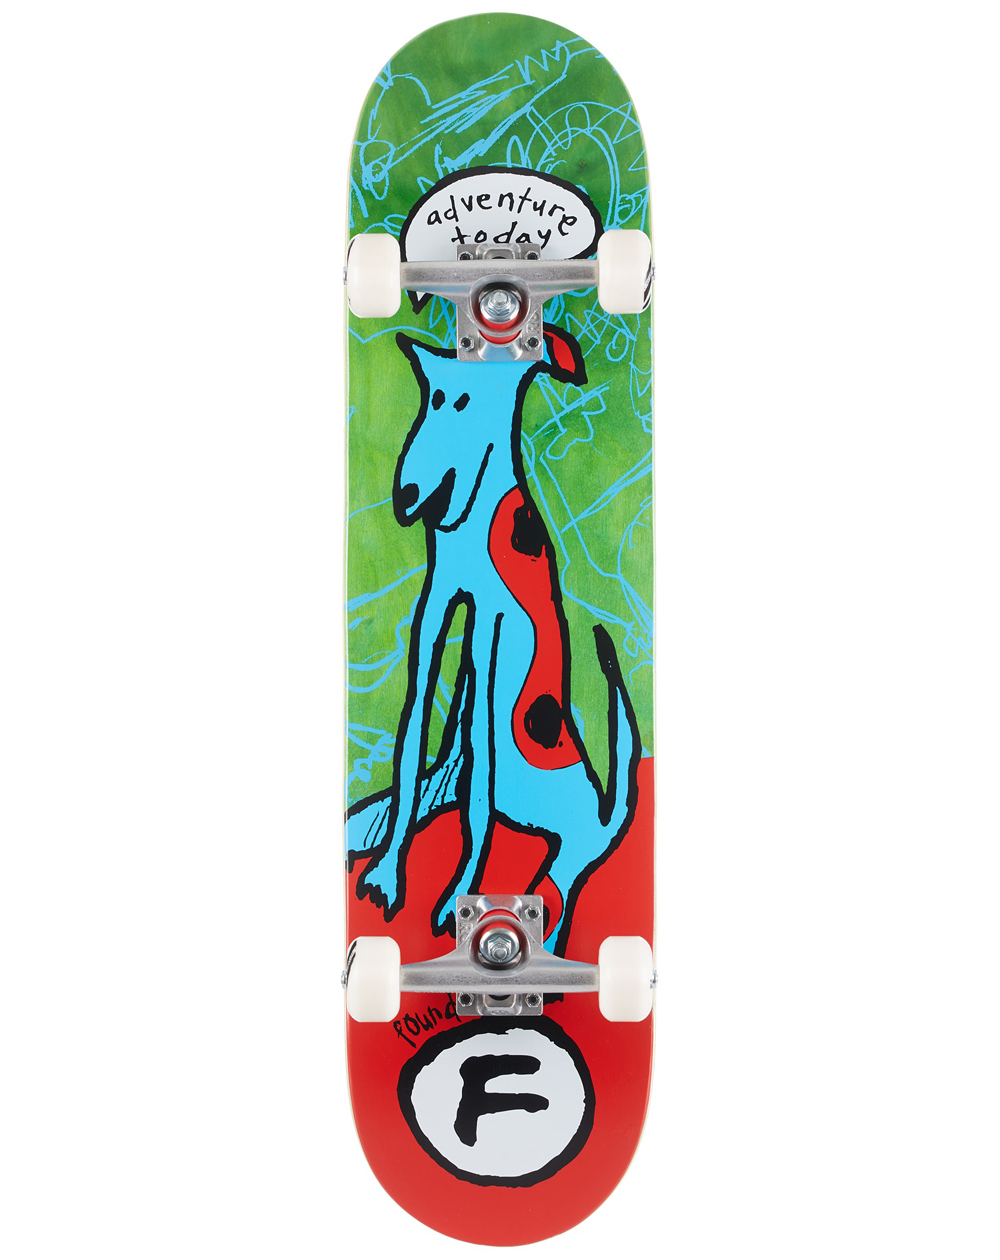 Foundation Skateboard Completo Adventure 2020 7.75" Green